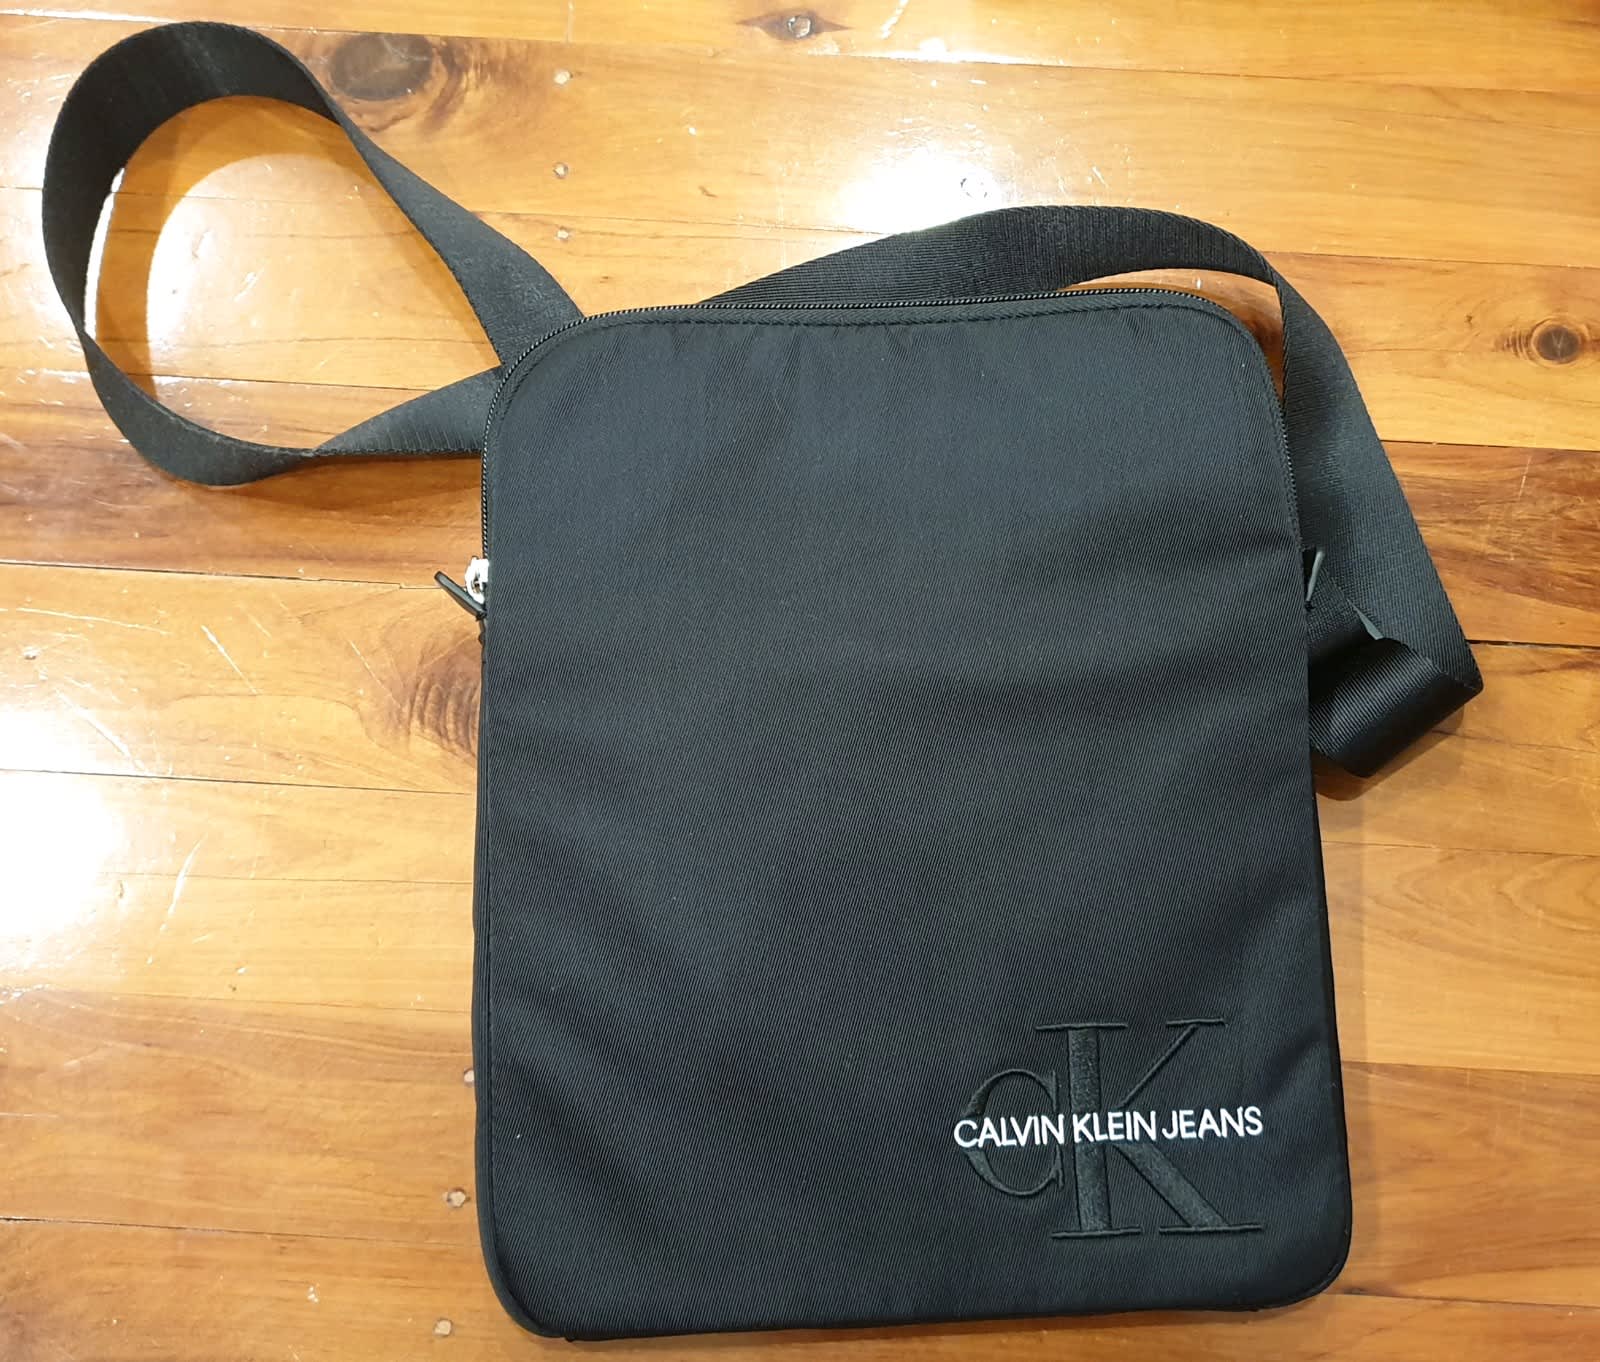 Luis V - laptop bag (Mens) - NEW (used once), Bags, Gumtree Australia  North Sydney Area - North Sydney